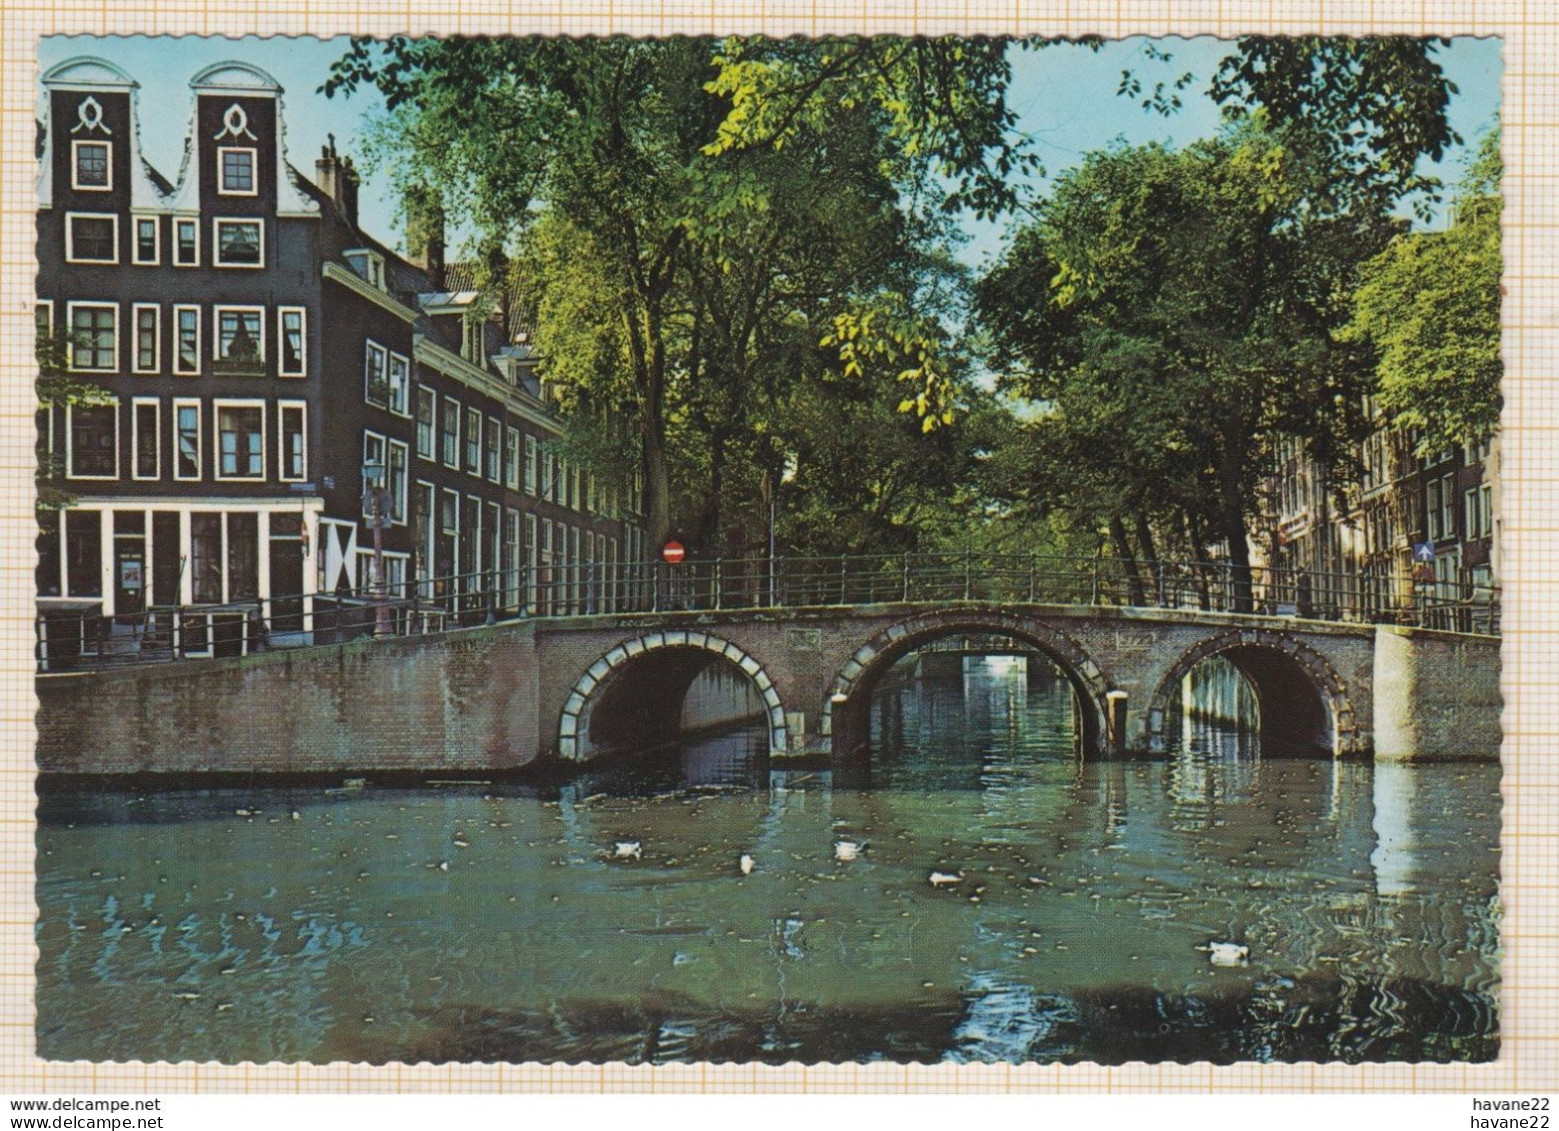 8AK4223 Amsterdam Bridge Across The Leidsegracht 2 SCANS - Amsterdam